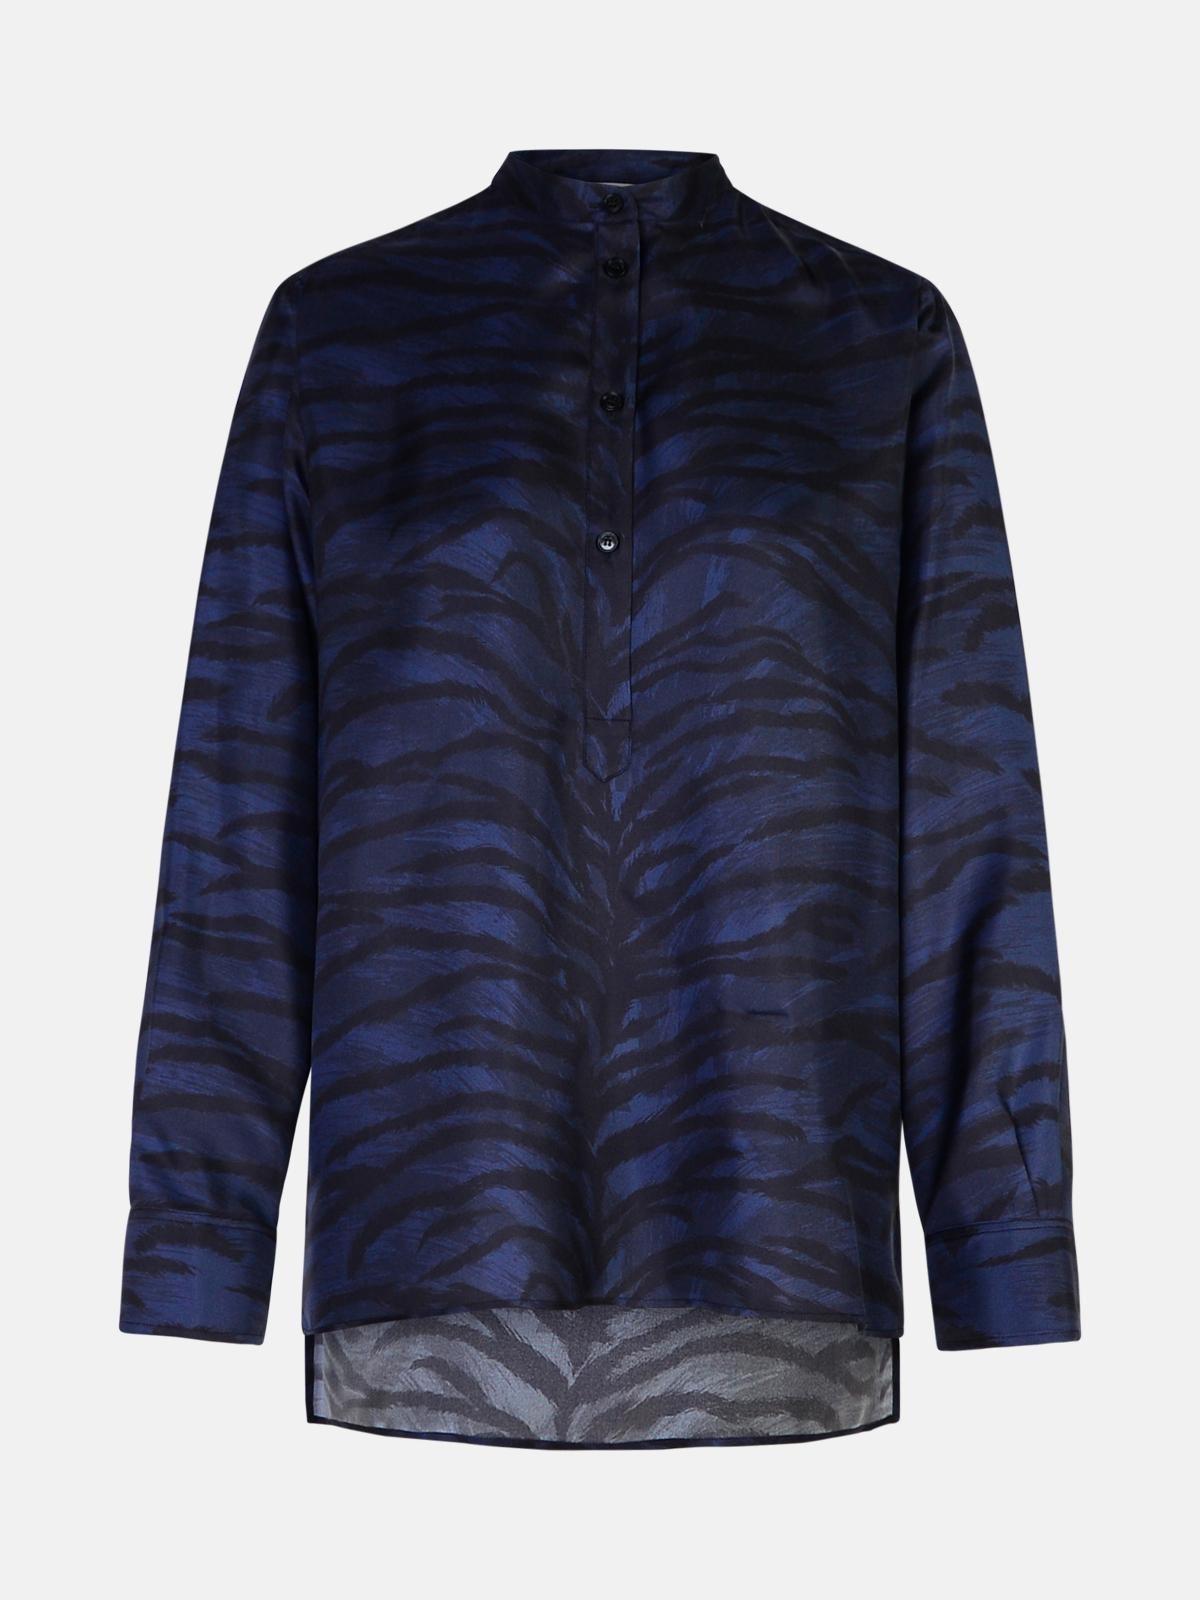 Stella Mccartney '' Tiger Print Blue And Black Silk Shirt